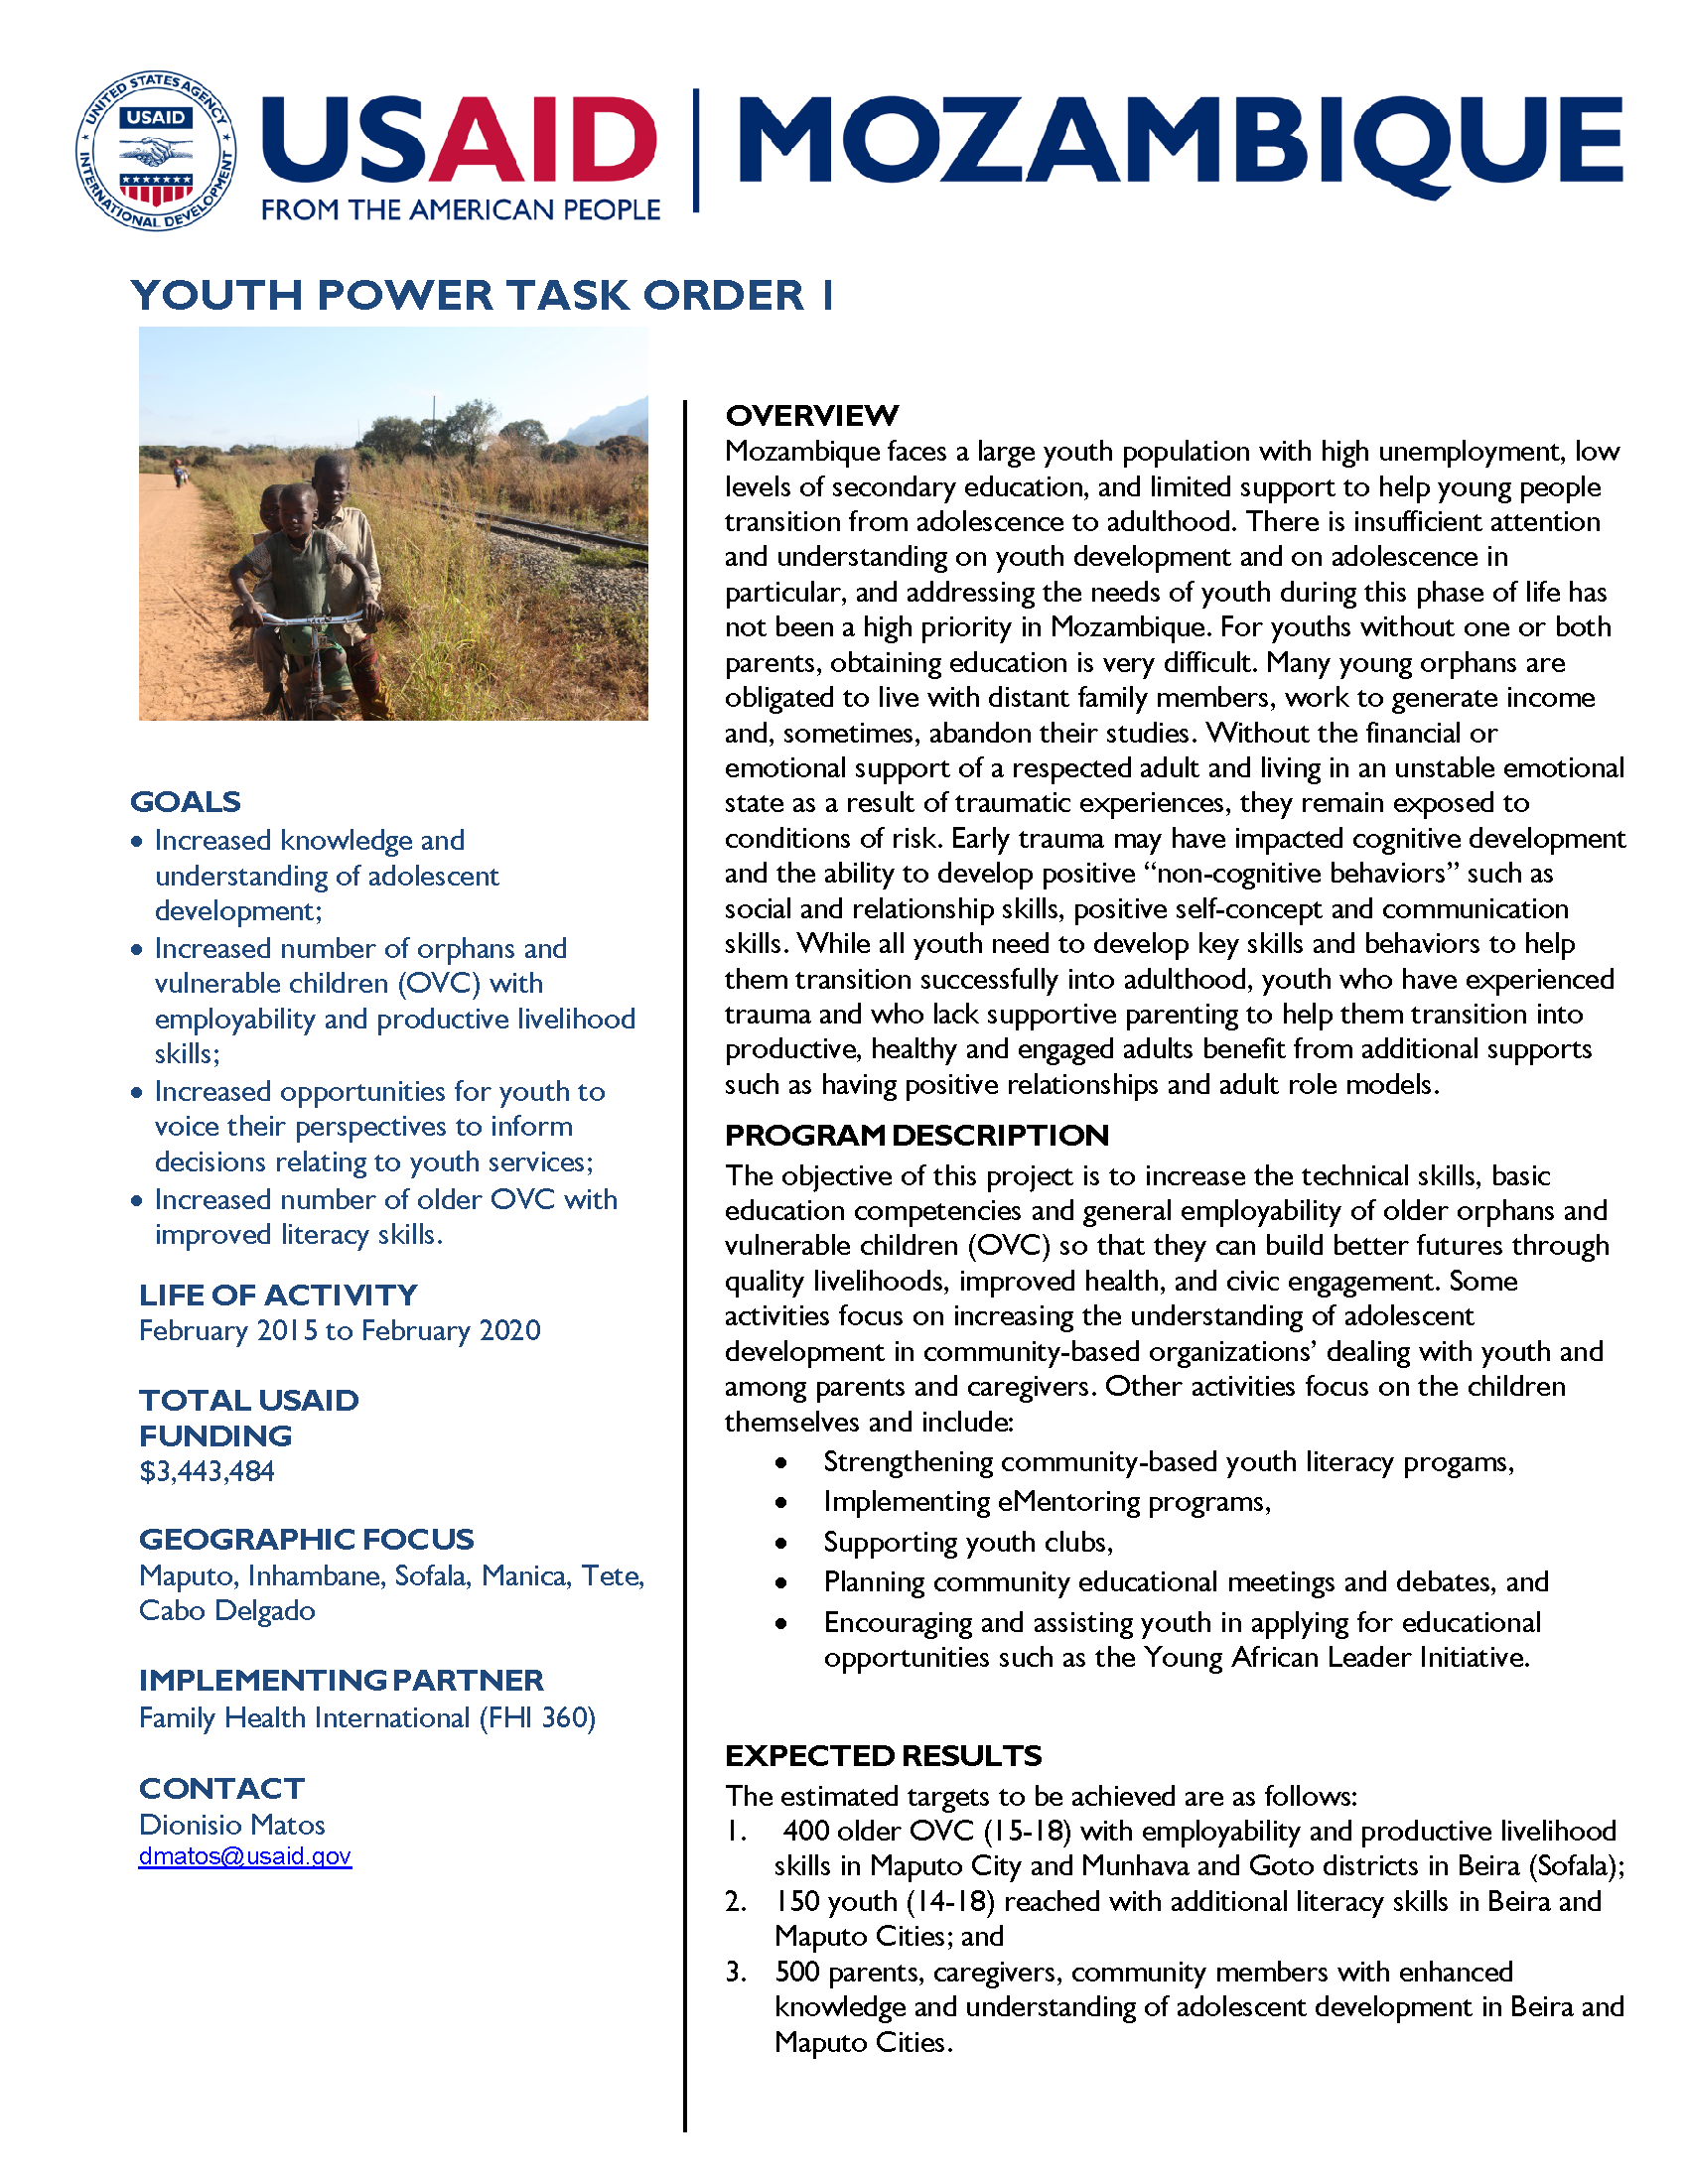 Youth Power Fact Sheet